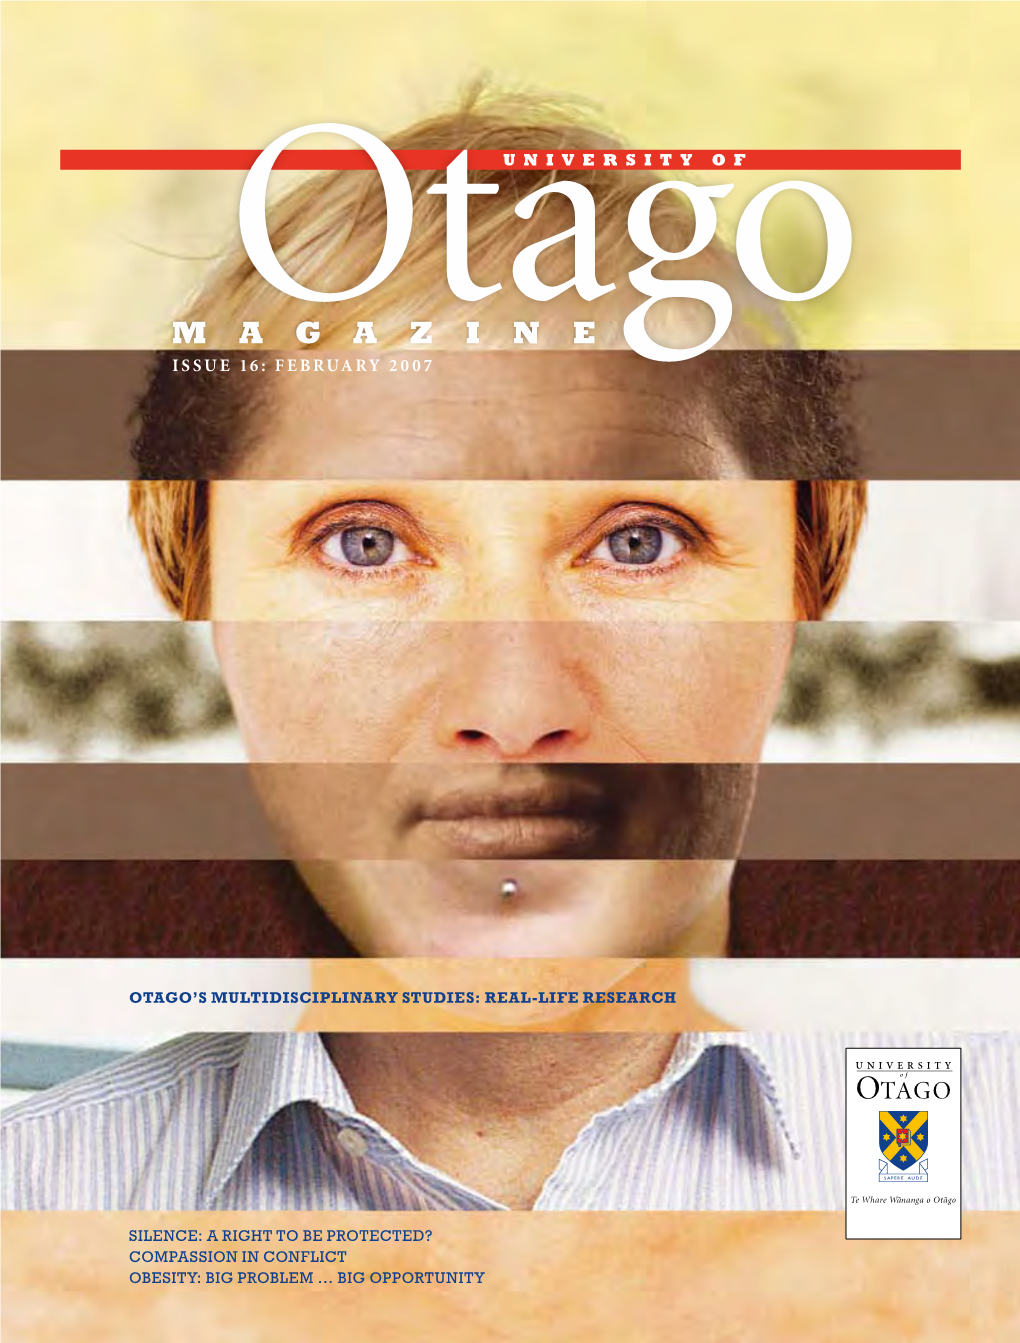 Issue 16 of the University of Otago Magazine